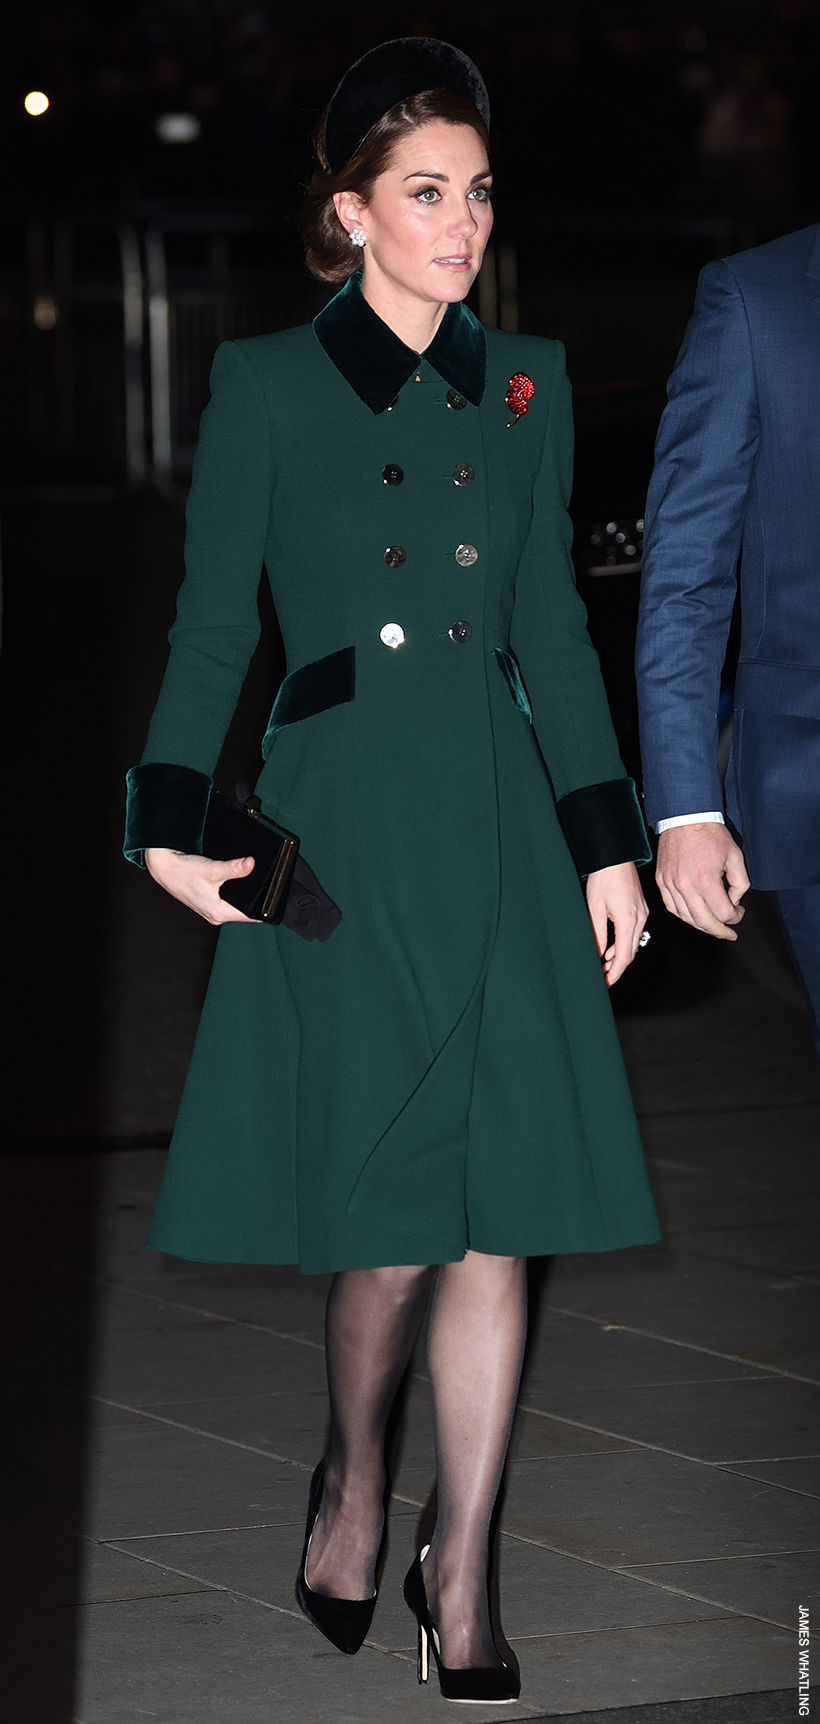 Kate Middleton looks super chic in this green coat with velvet trim.